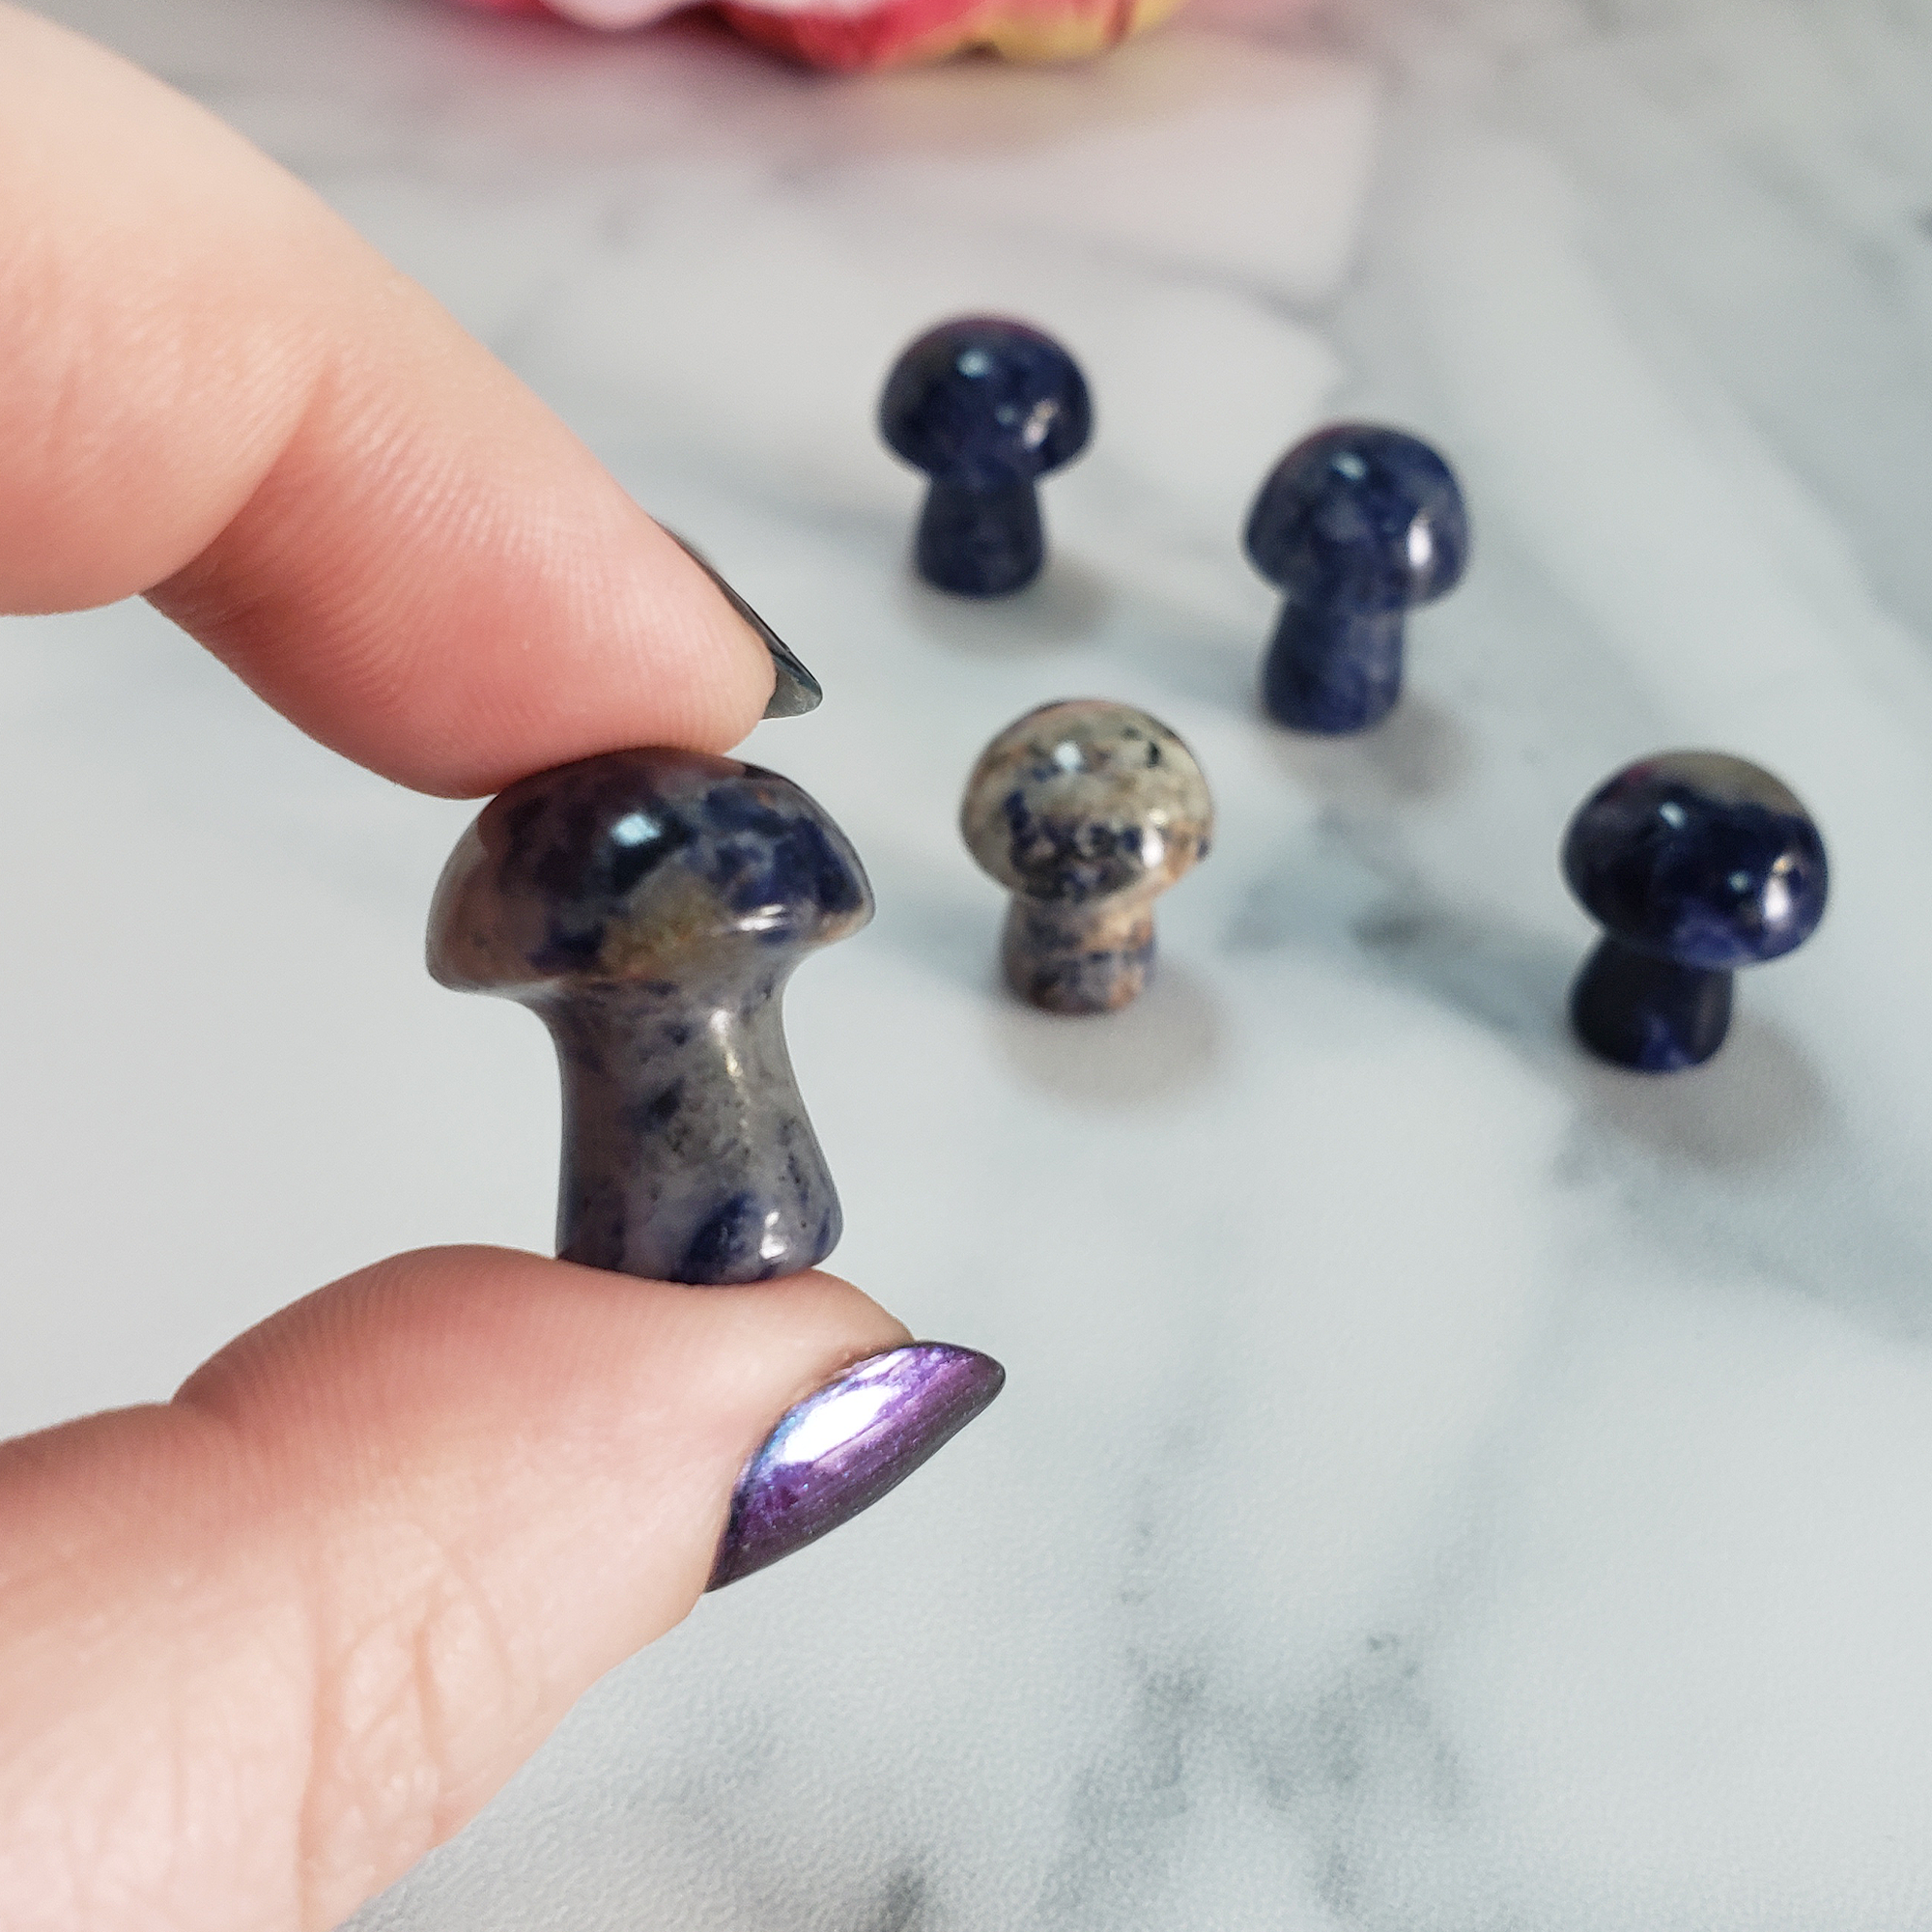 Sodalite Crystal Natural Gemstone Mushroom Toadstool Mini Carving - Blue Sodalite Stone Shrooms